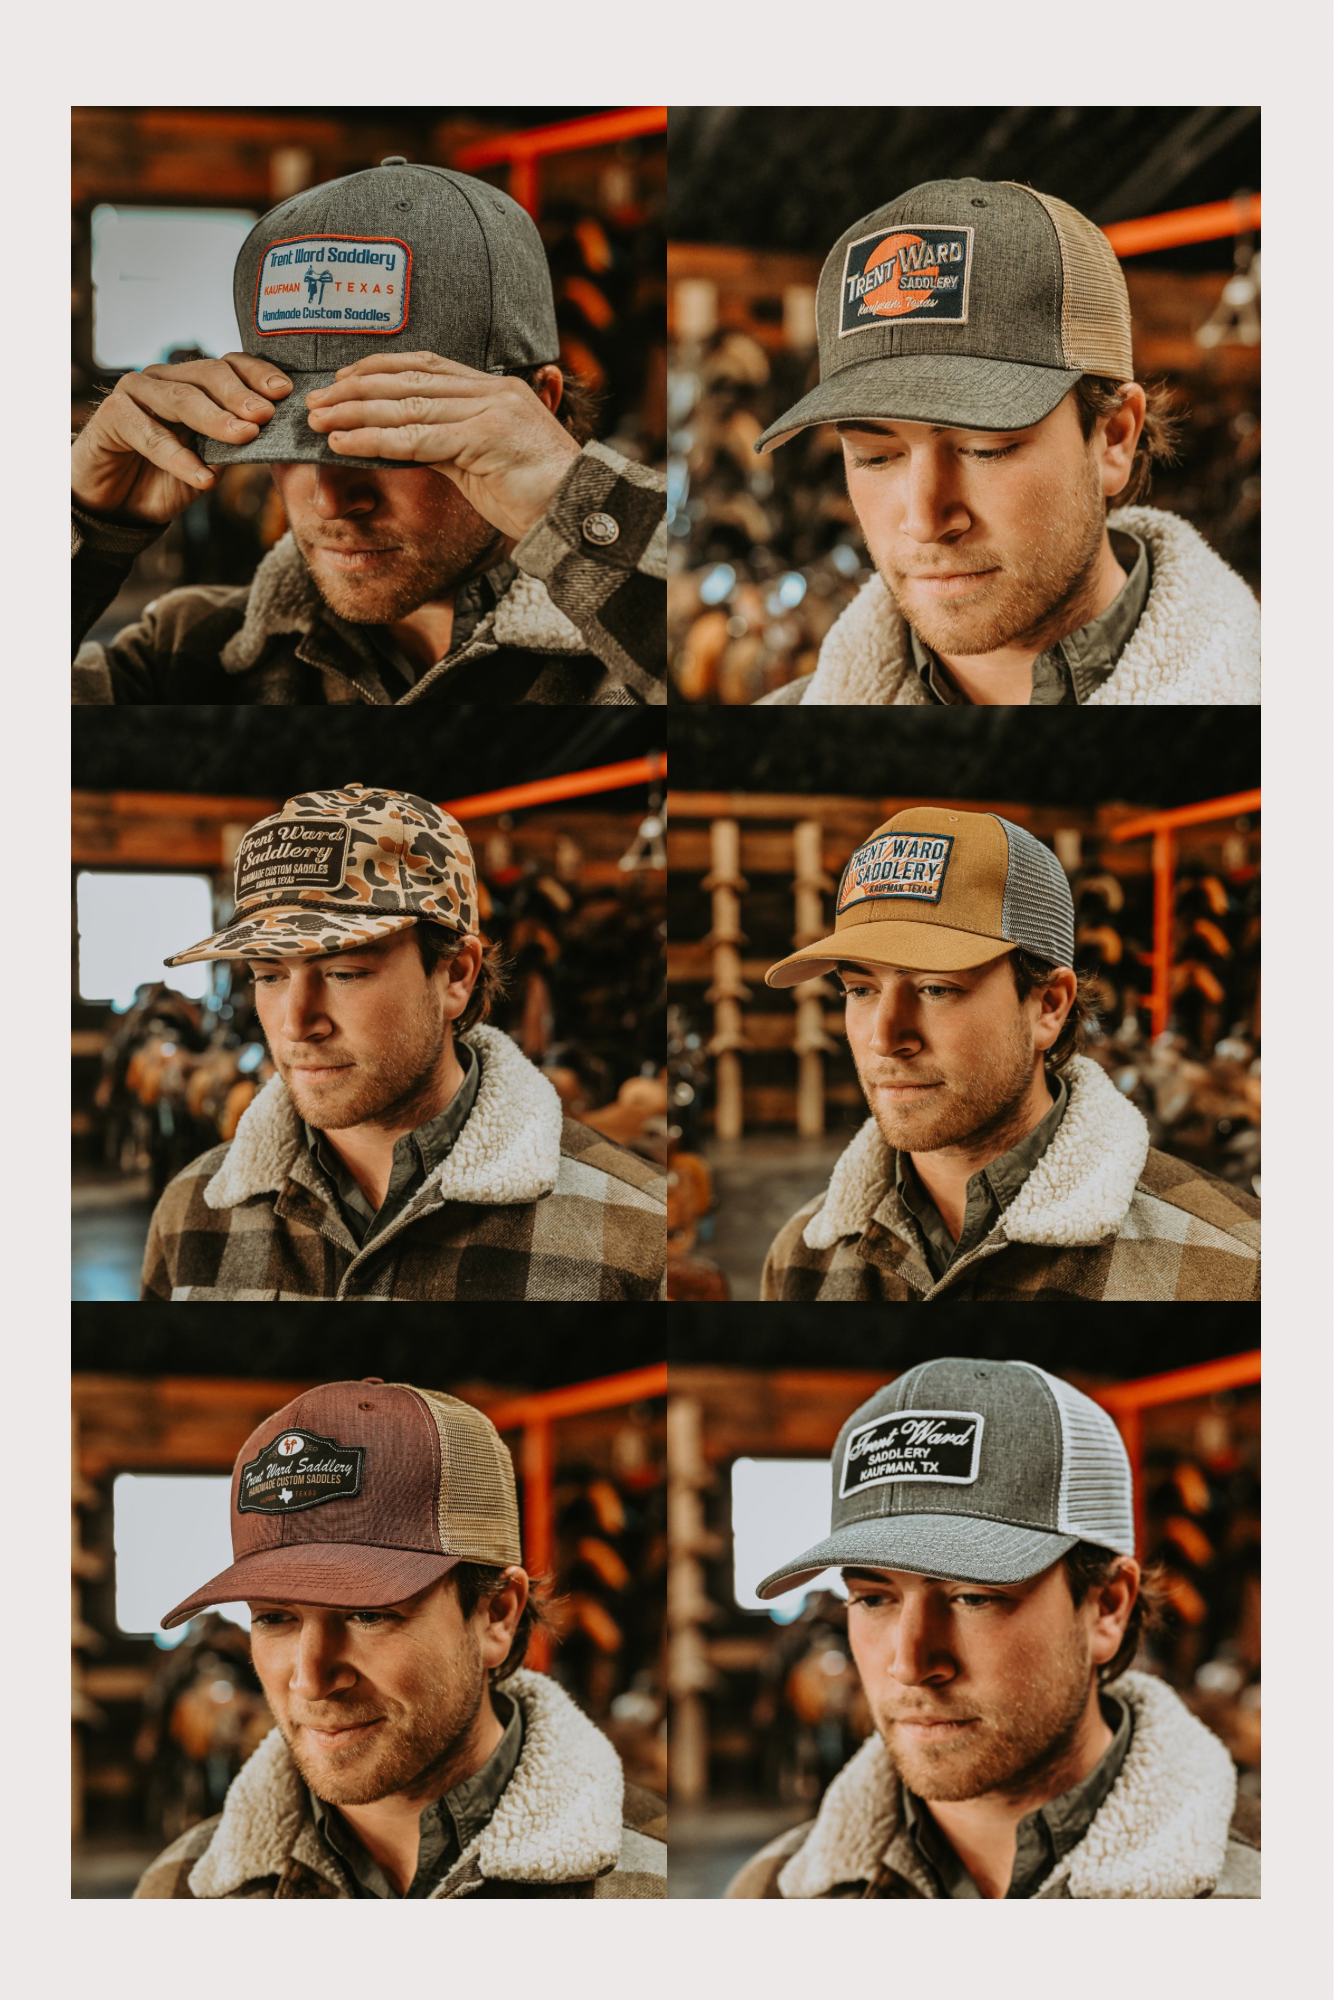 Trent Ward Saddlery Caps